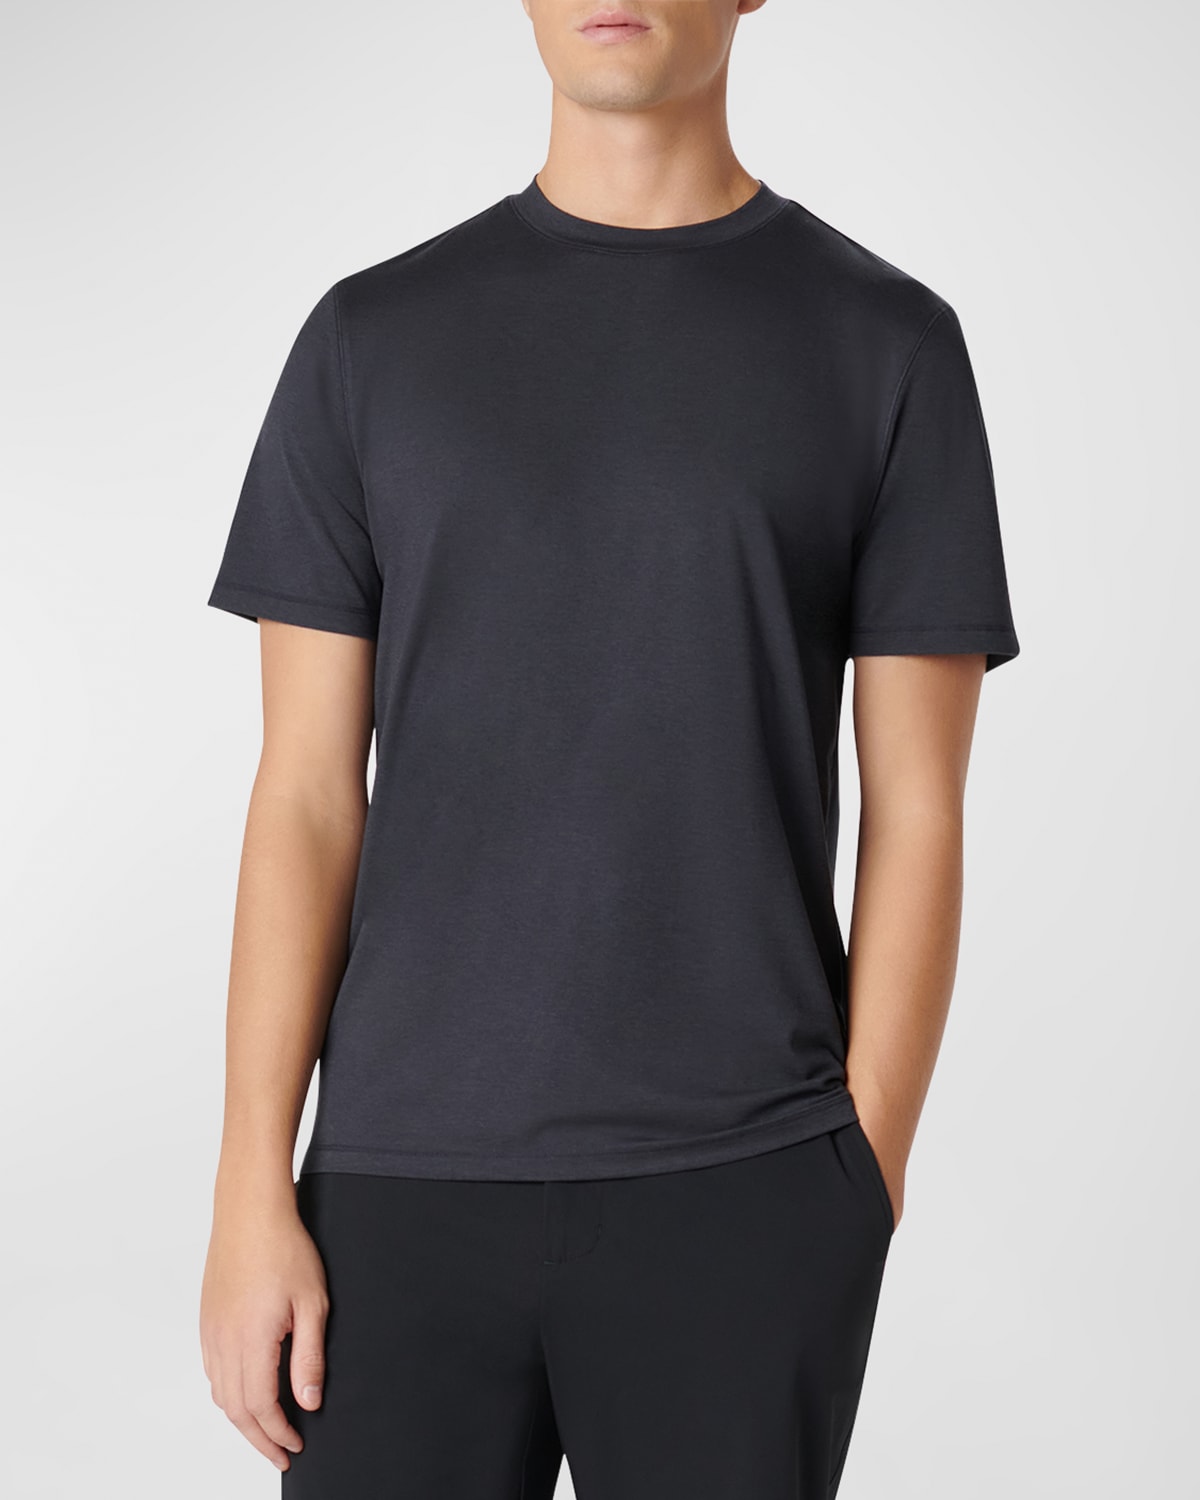 Men's UV50 Performance T-Shirt